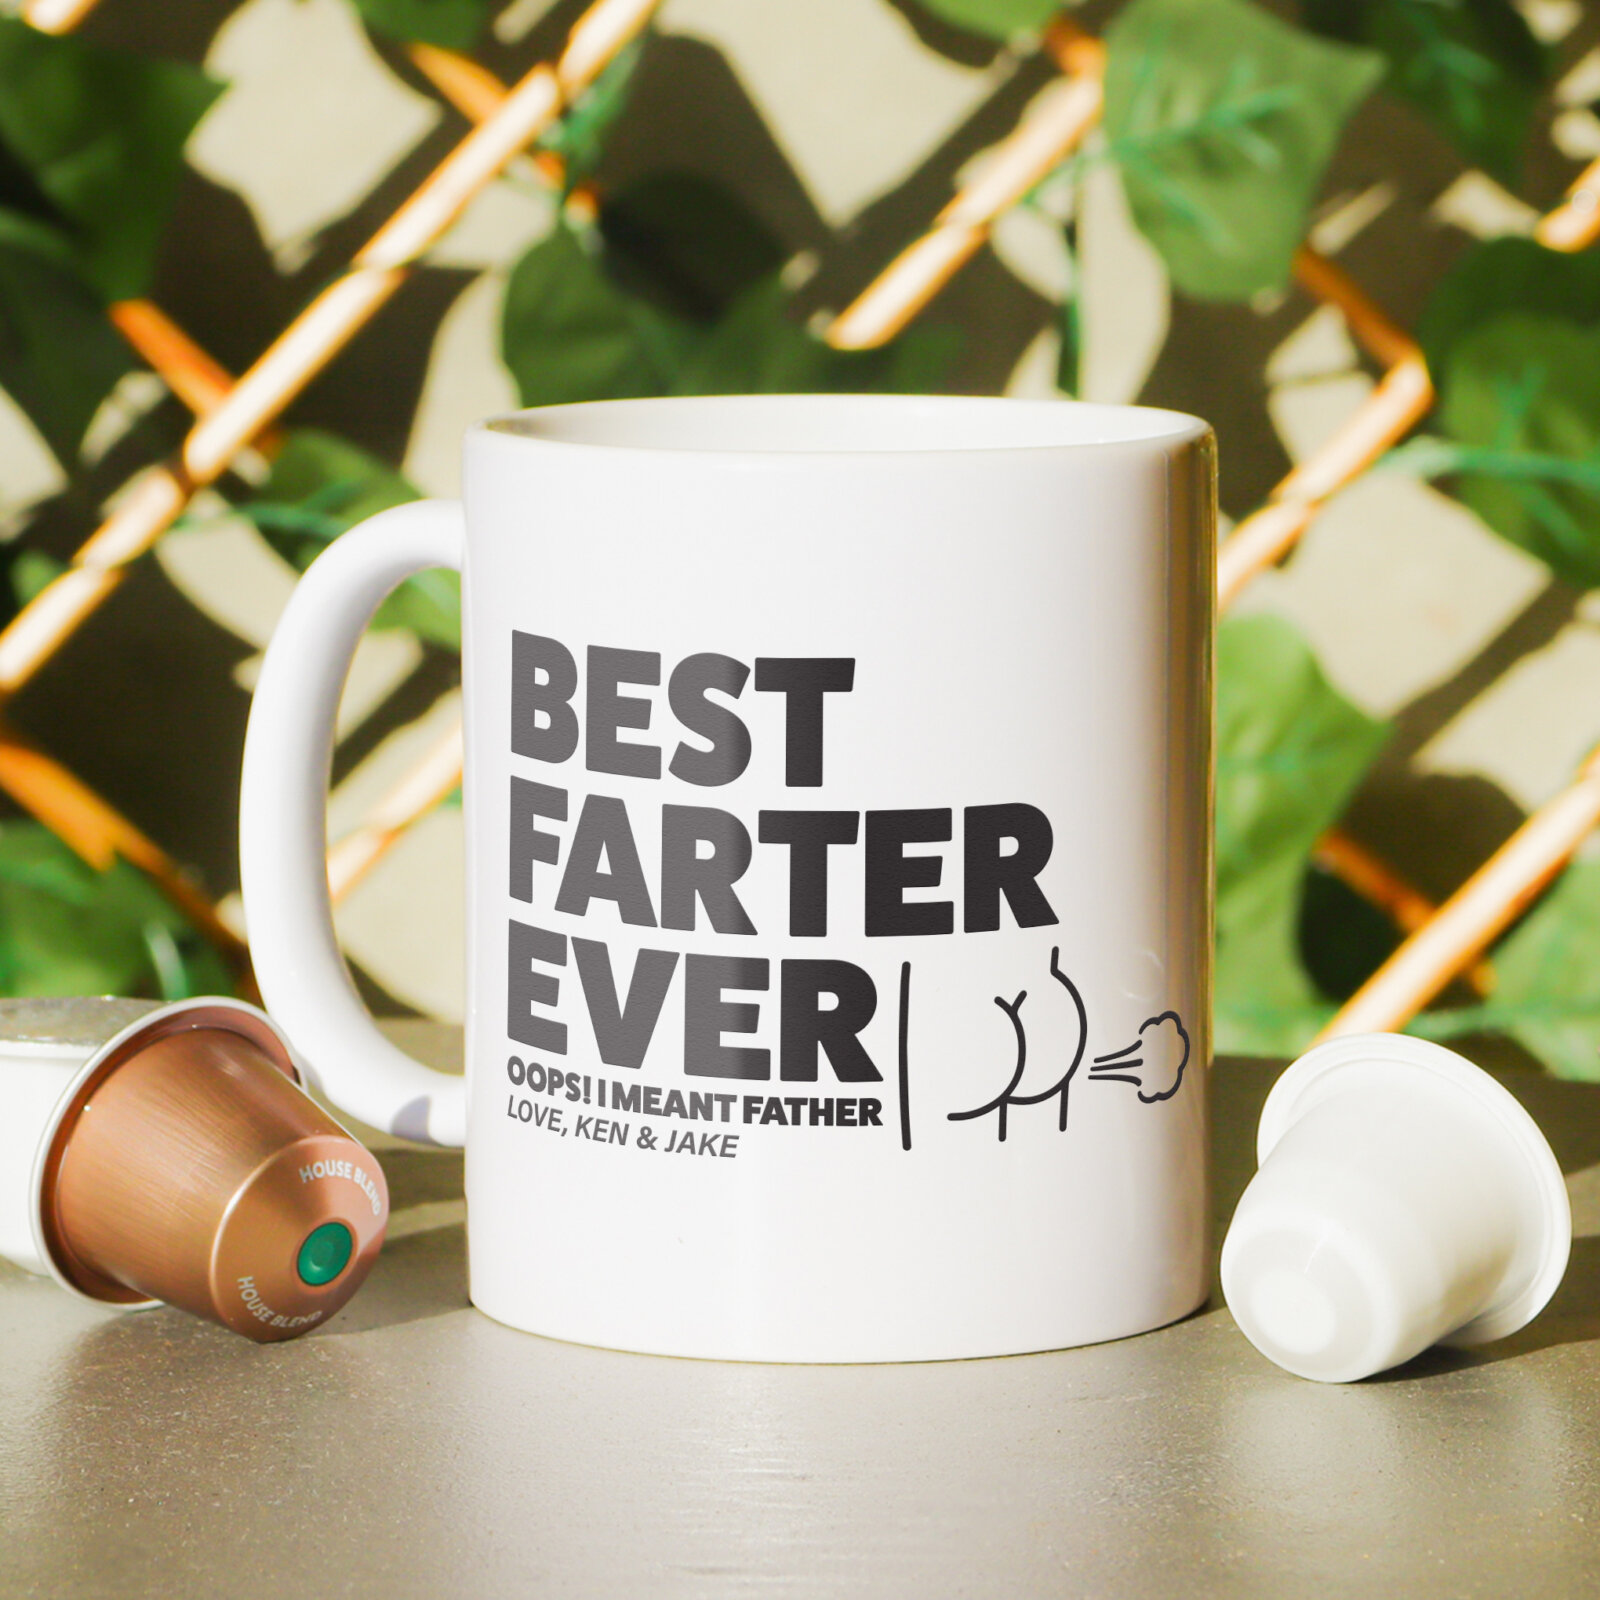 Best farter ever coffee mug